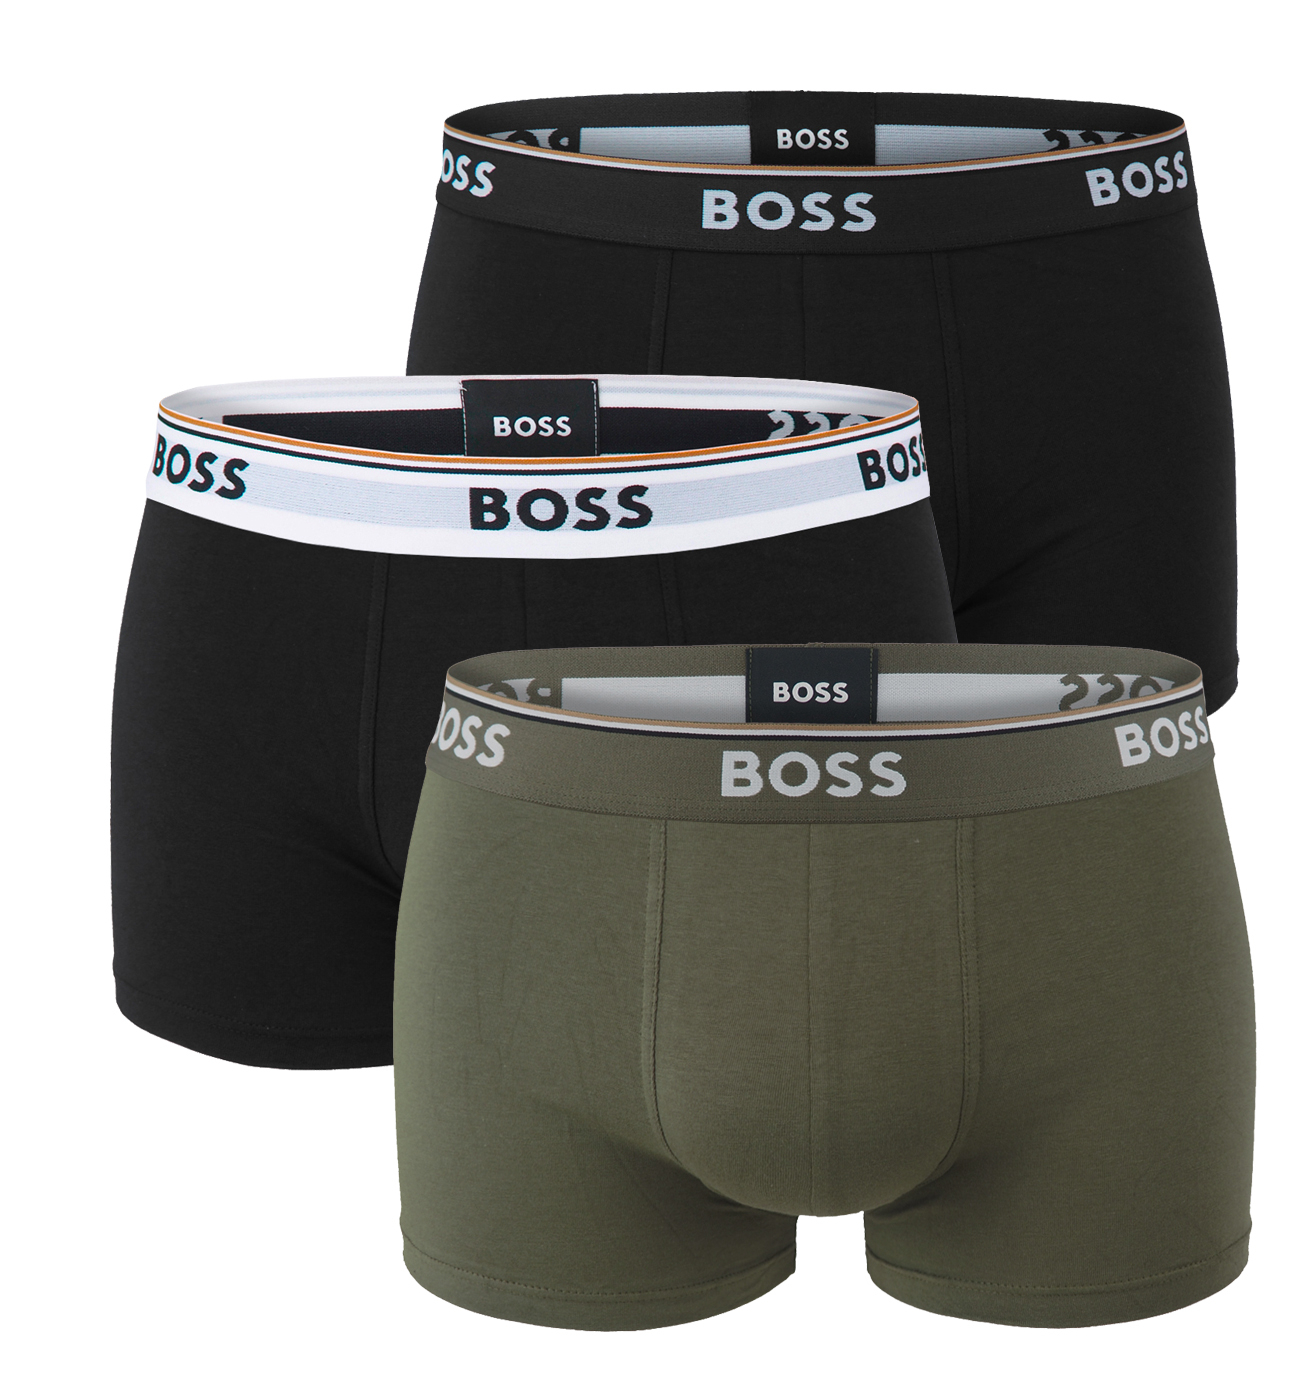 BOSS - boxerky 3PACK cotton stretch power design army green & dark color combo - limitovaná fashion edícia (HUGO BOSS)